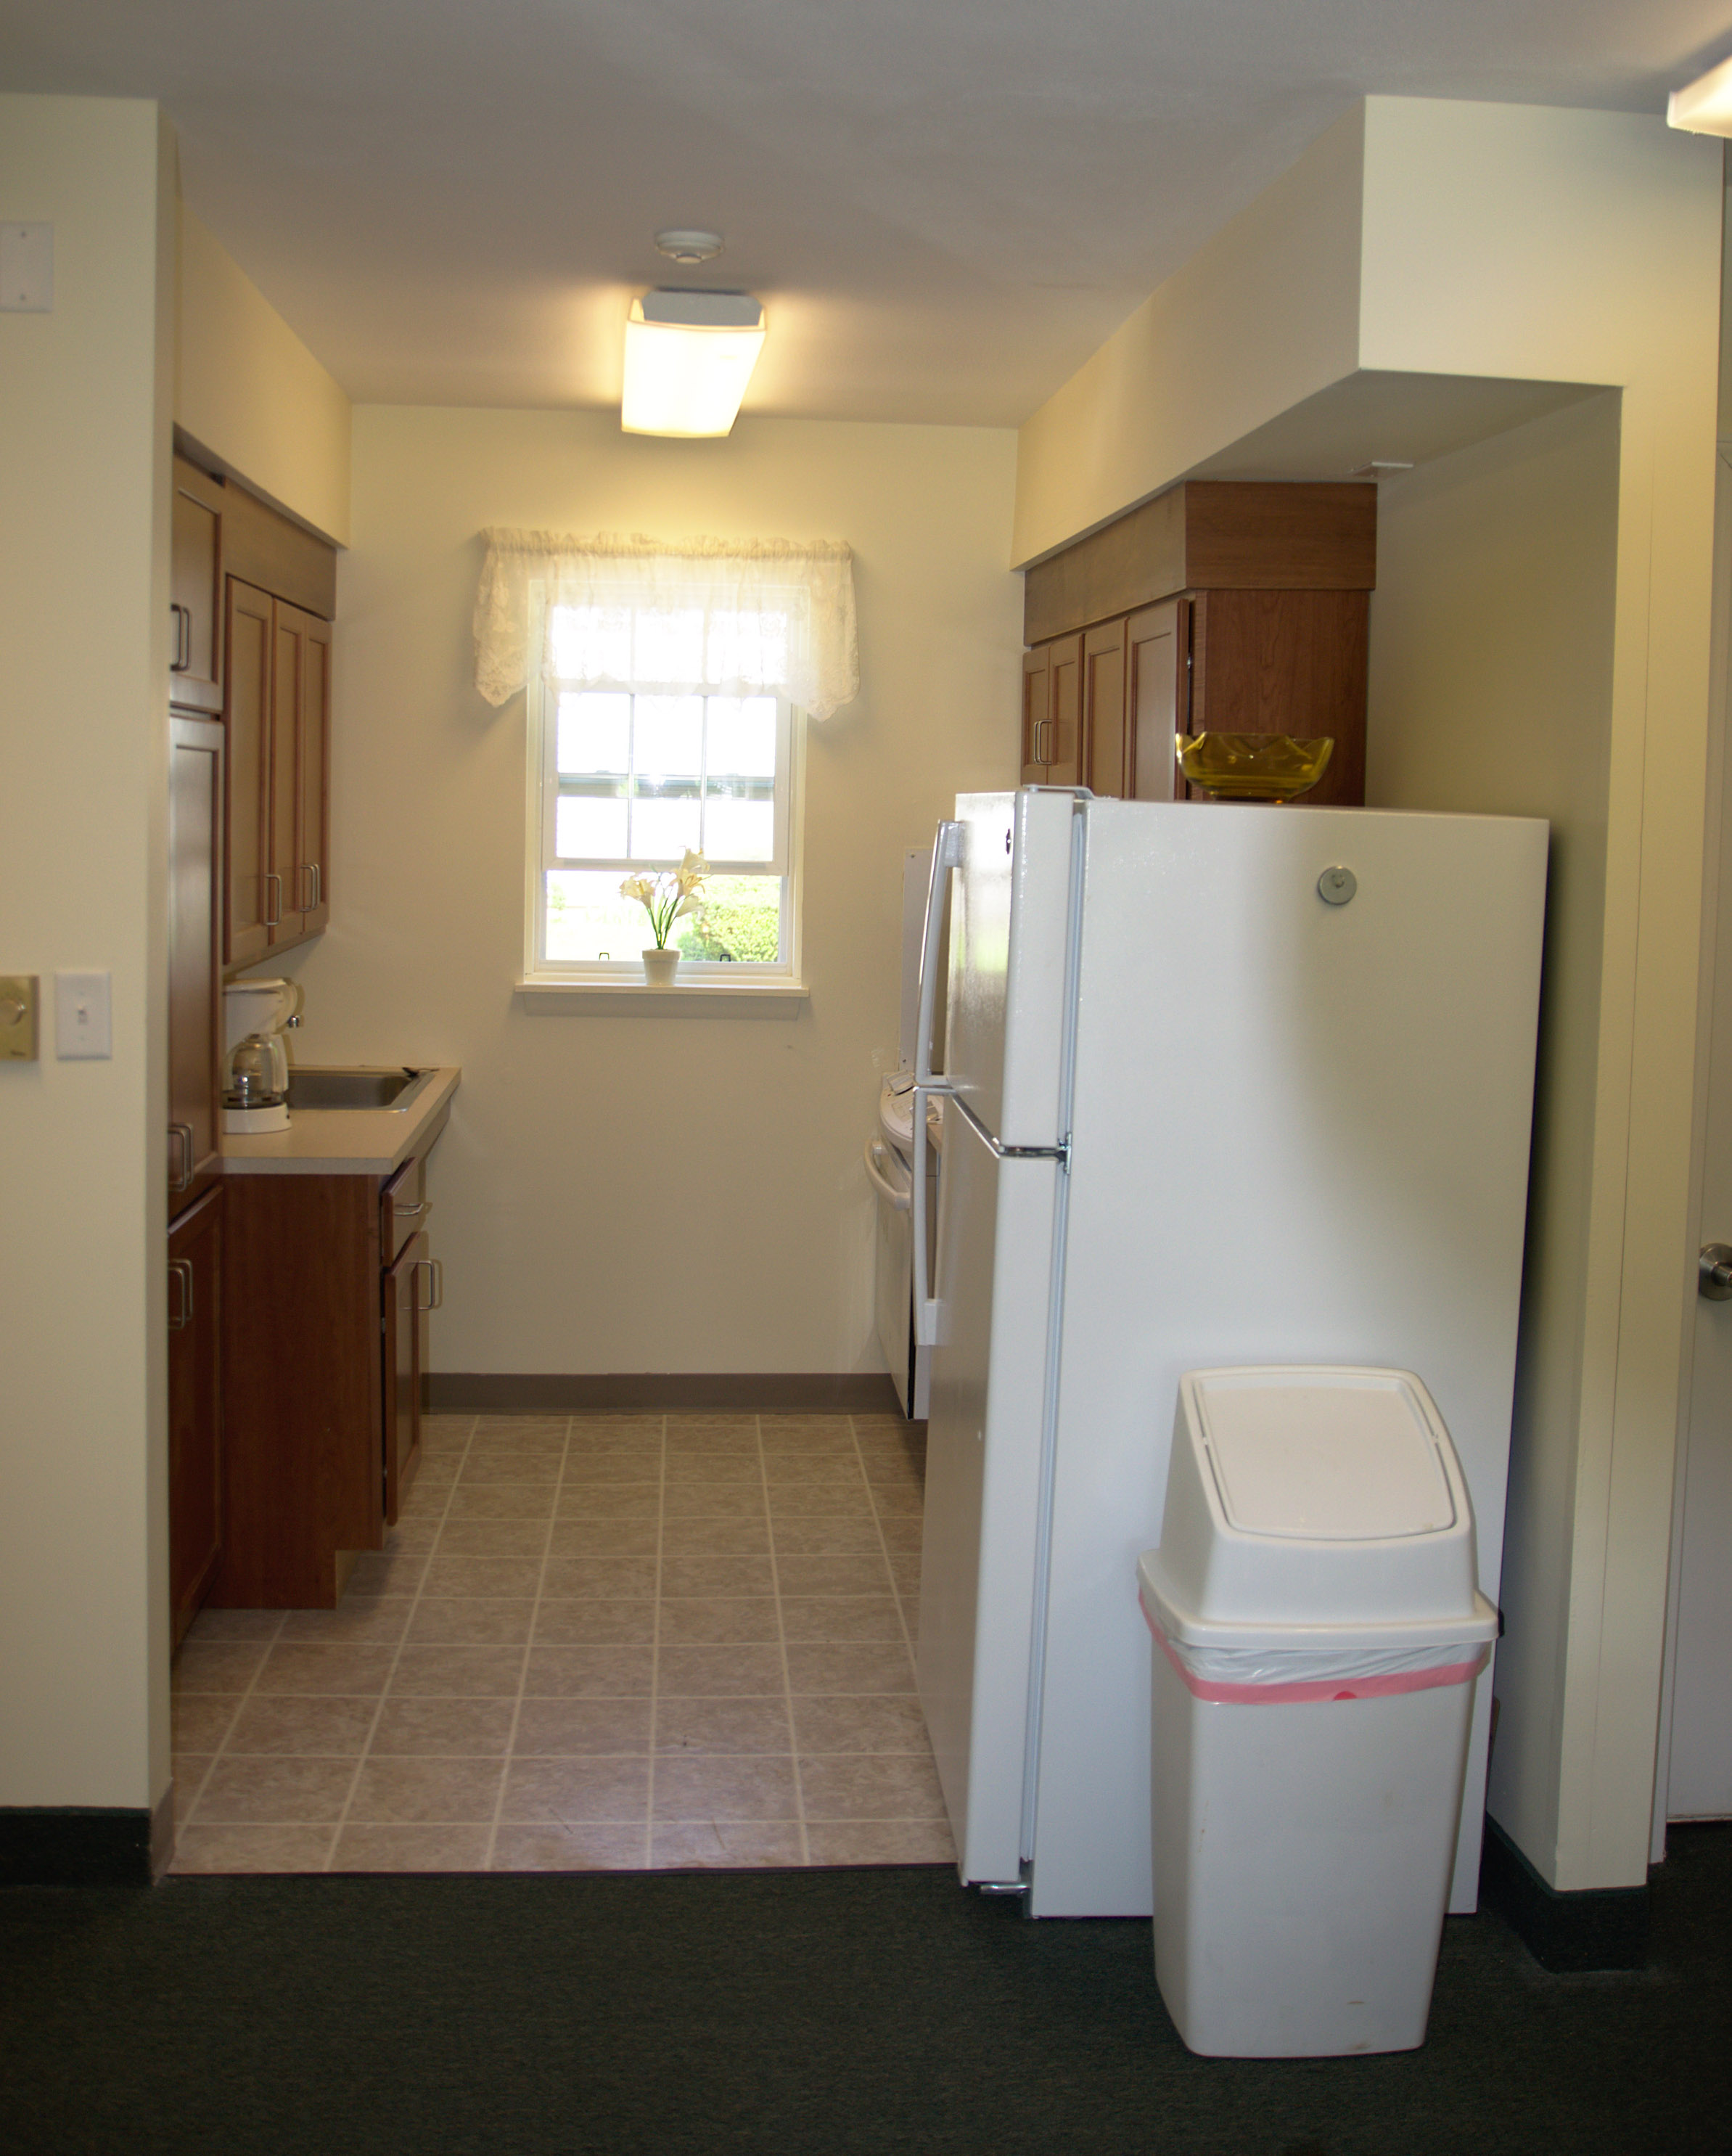 property management company syracuse ny image of community room kitchen at community manor II